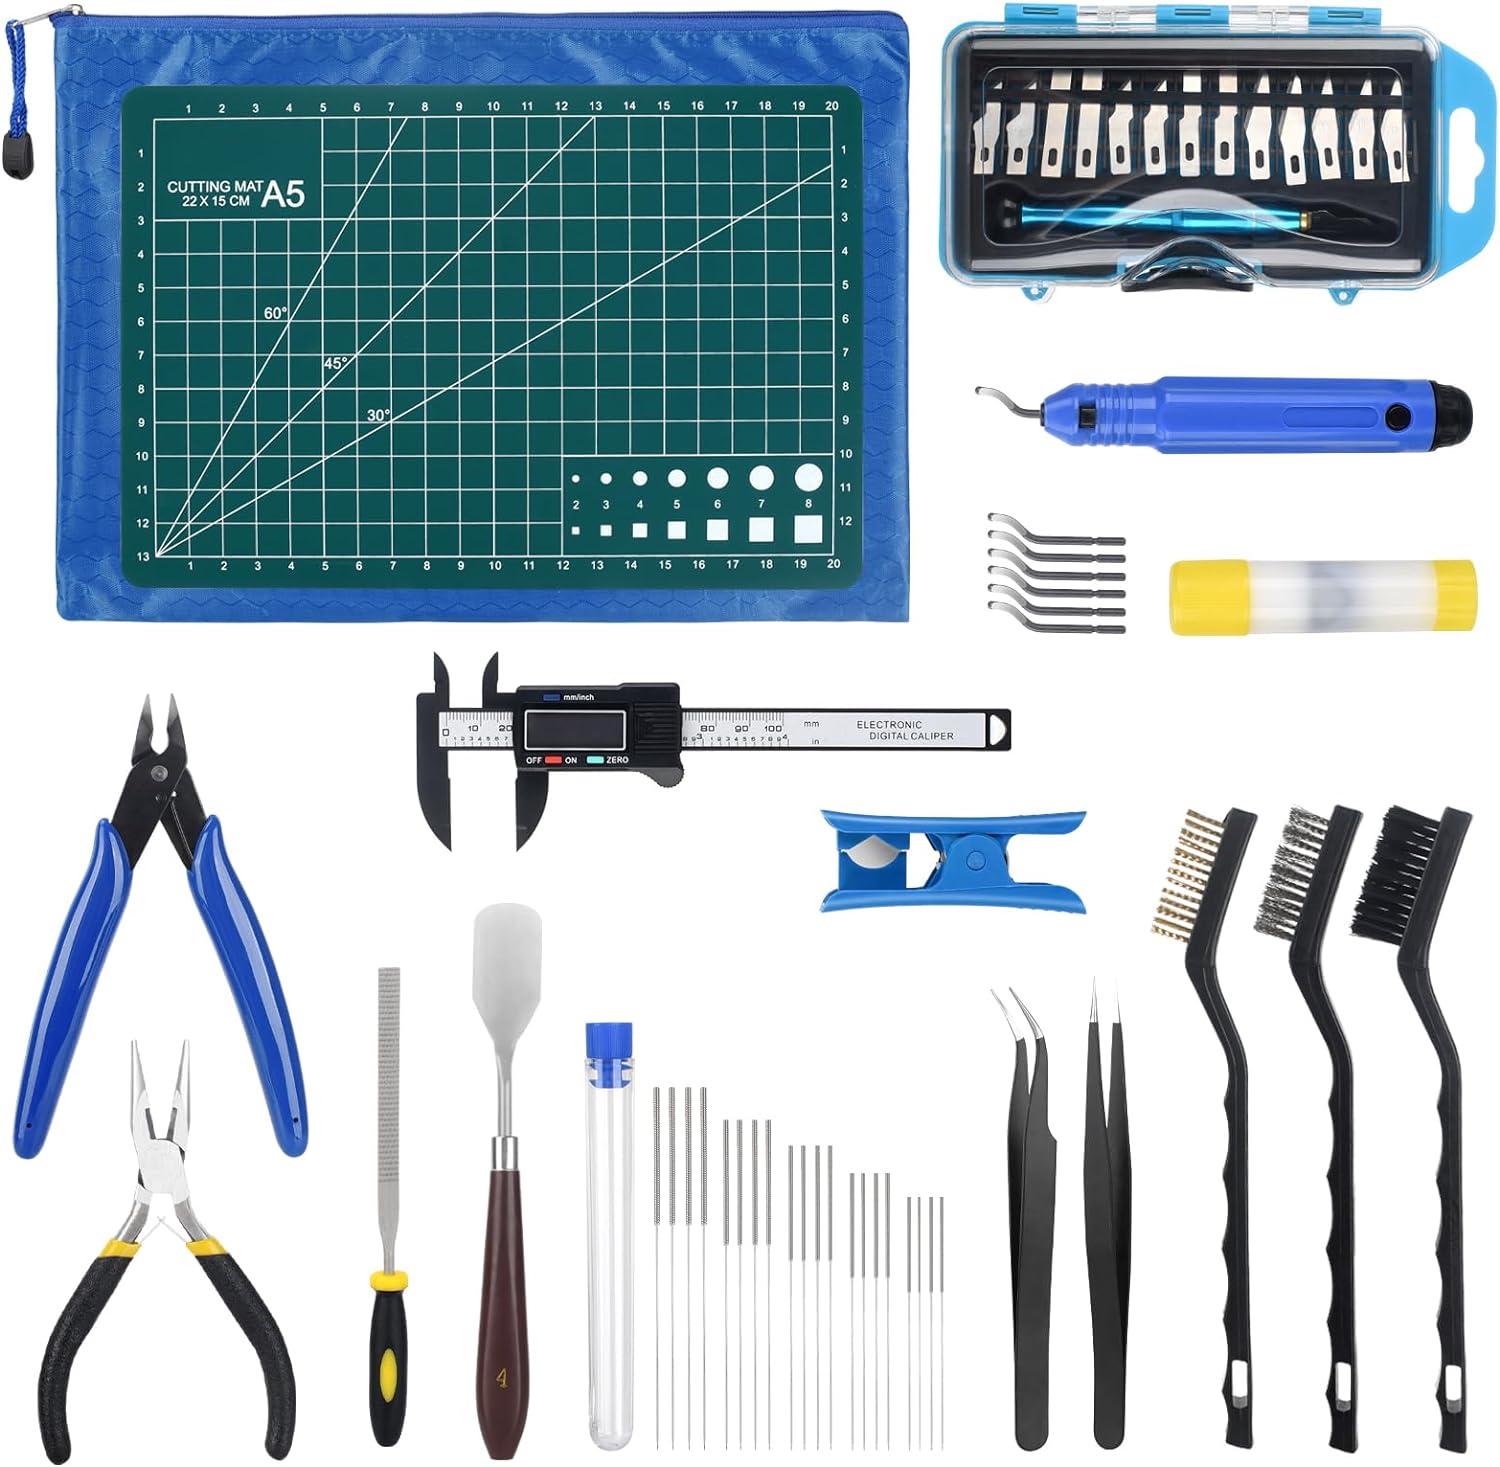 3d-printer-tools-kit-3d-printing-accessory-with-55pcs-includes-deburring-tool-digital-caliper-art-knife-set-tube-cutter- 3D Printer Tools Kit Review